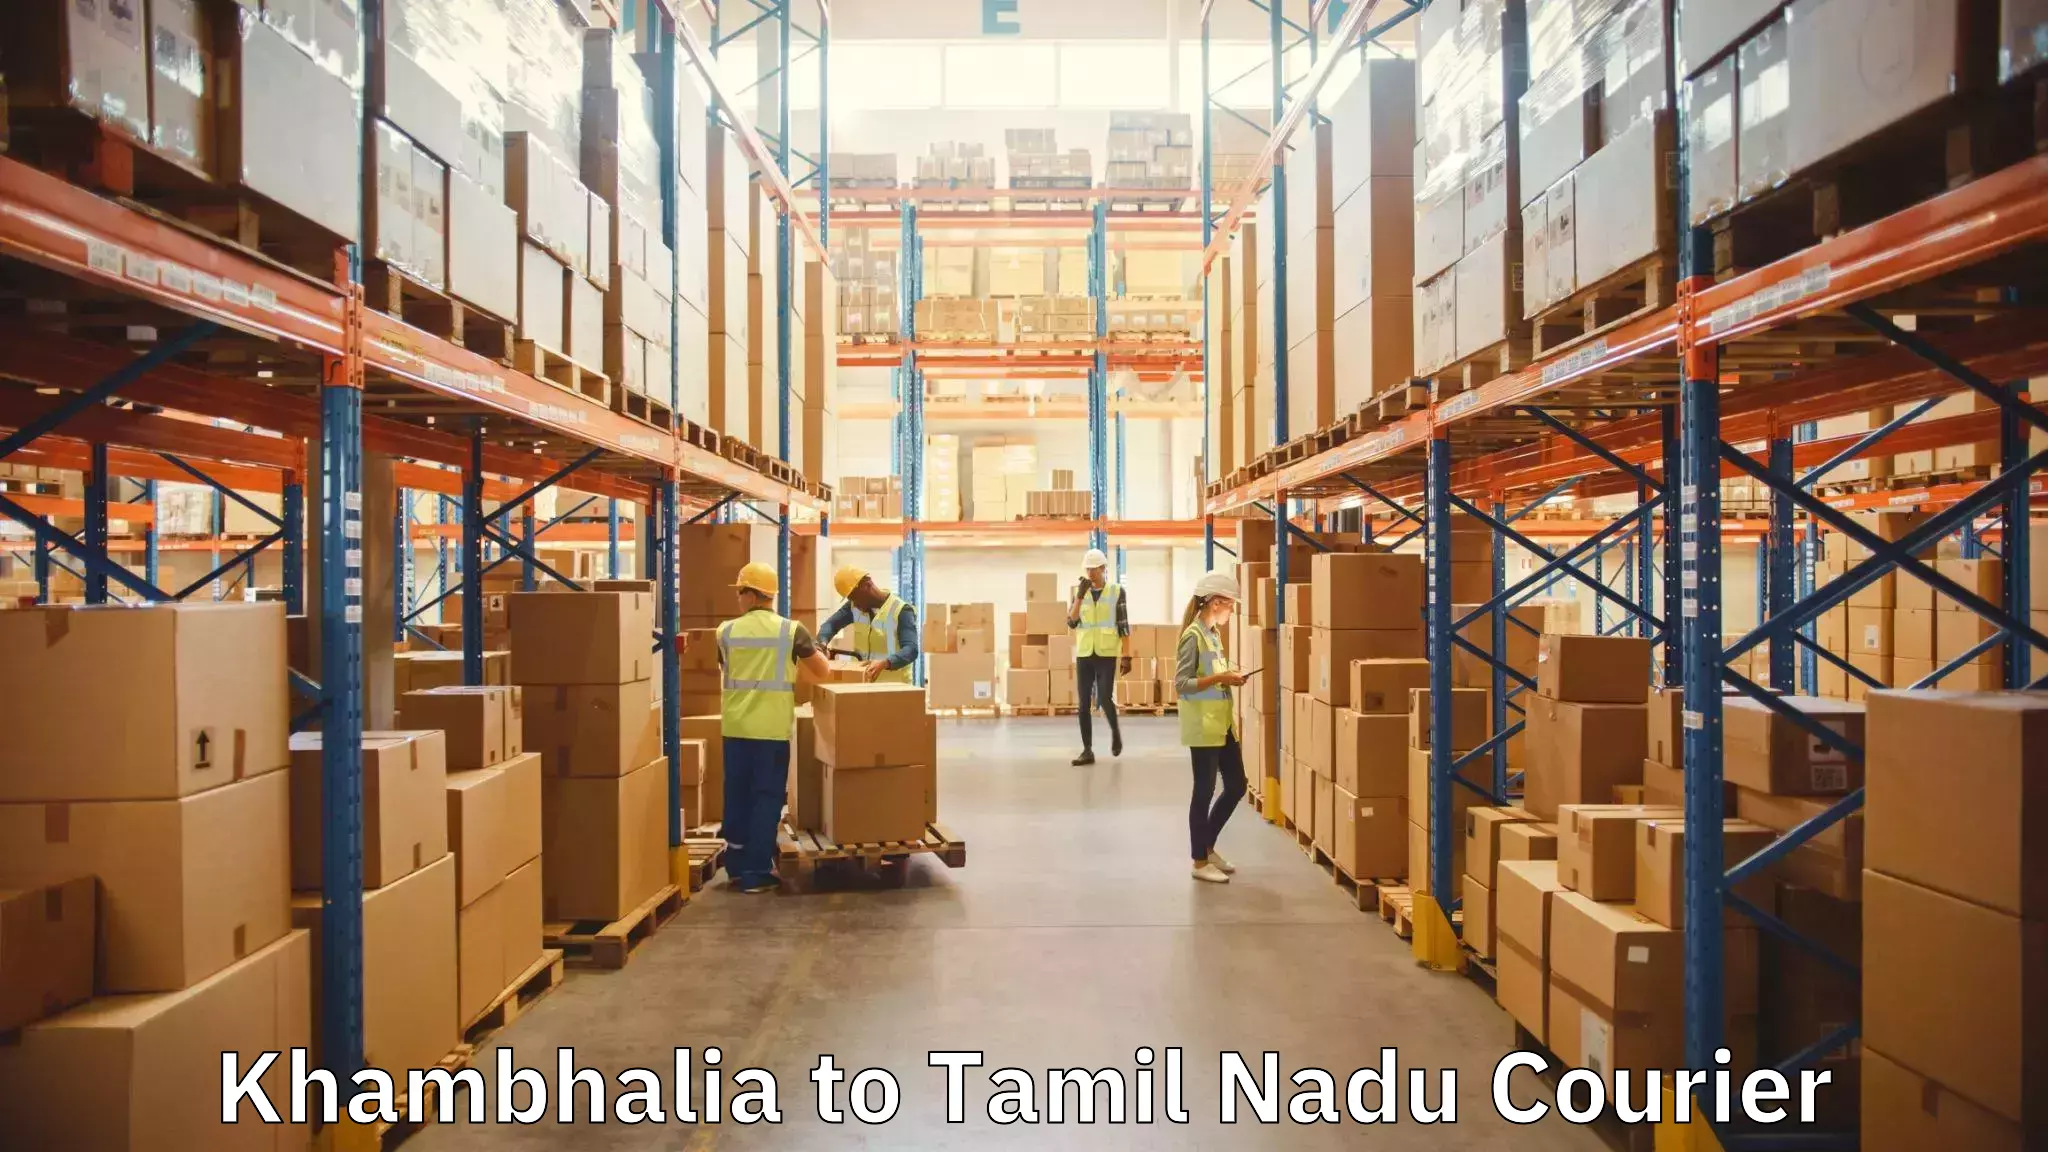 Professional moving company Khambhalia to Tamil Nadu